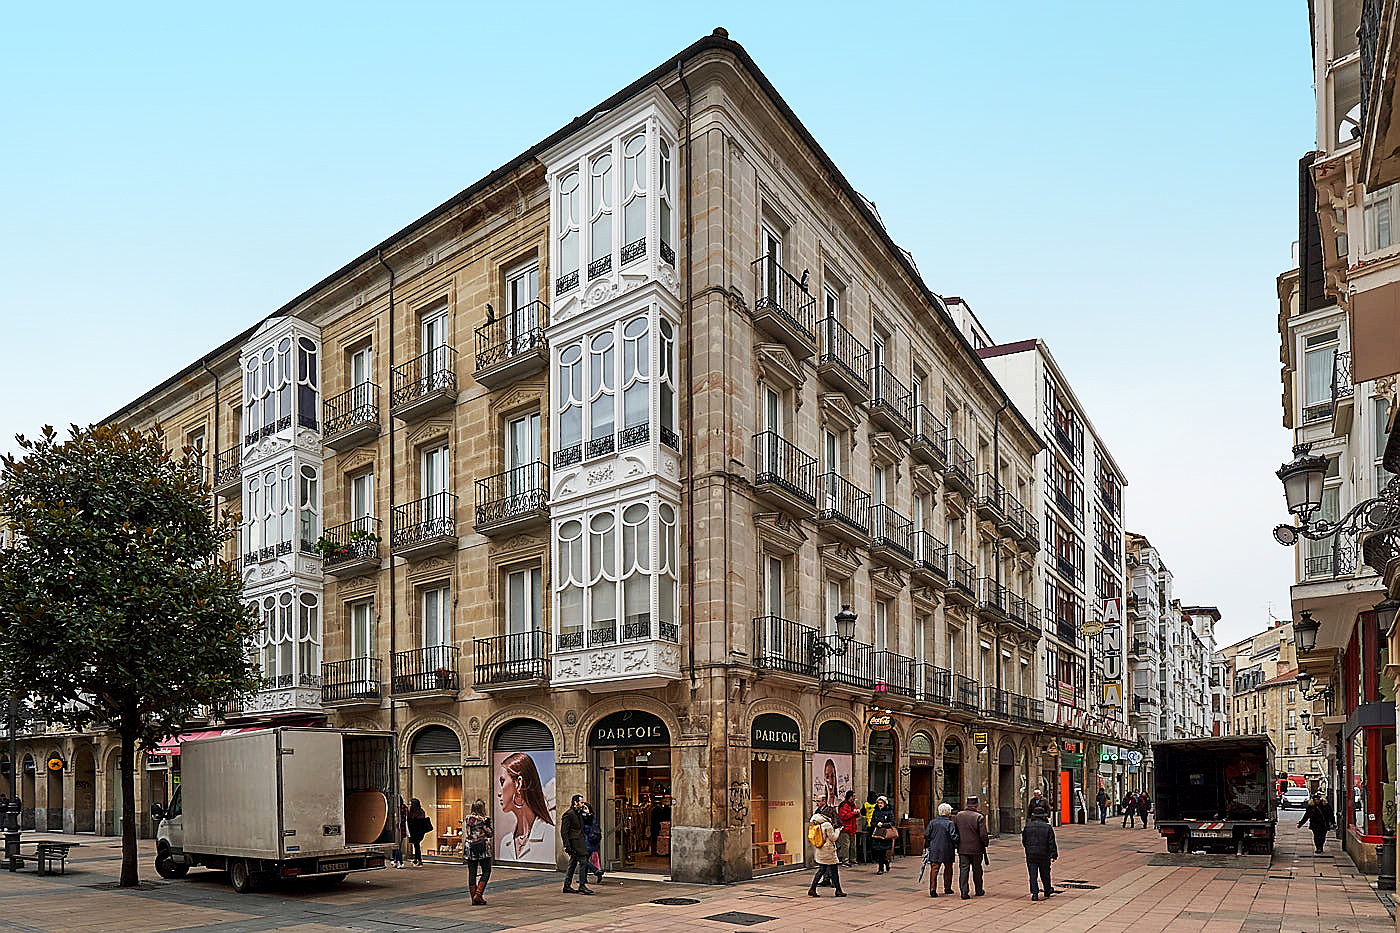  Vitoria
- Engel & Völkers - Inmobiliaria en Vitoria-Gasteiz - Calle Dato